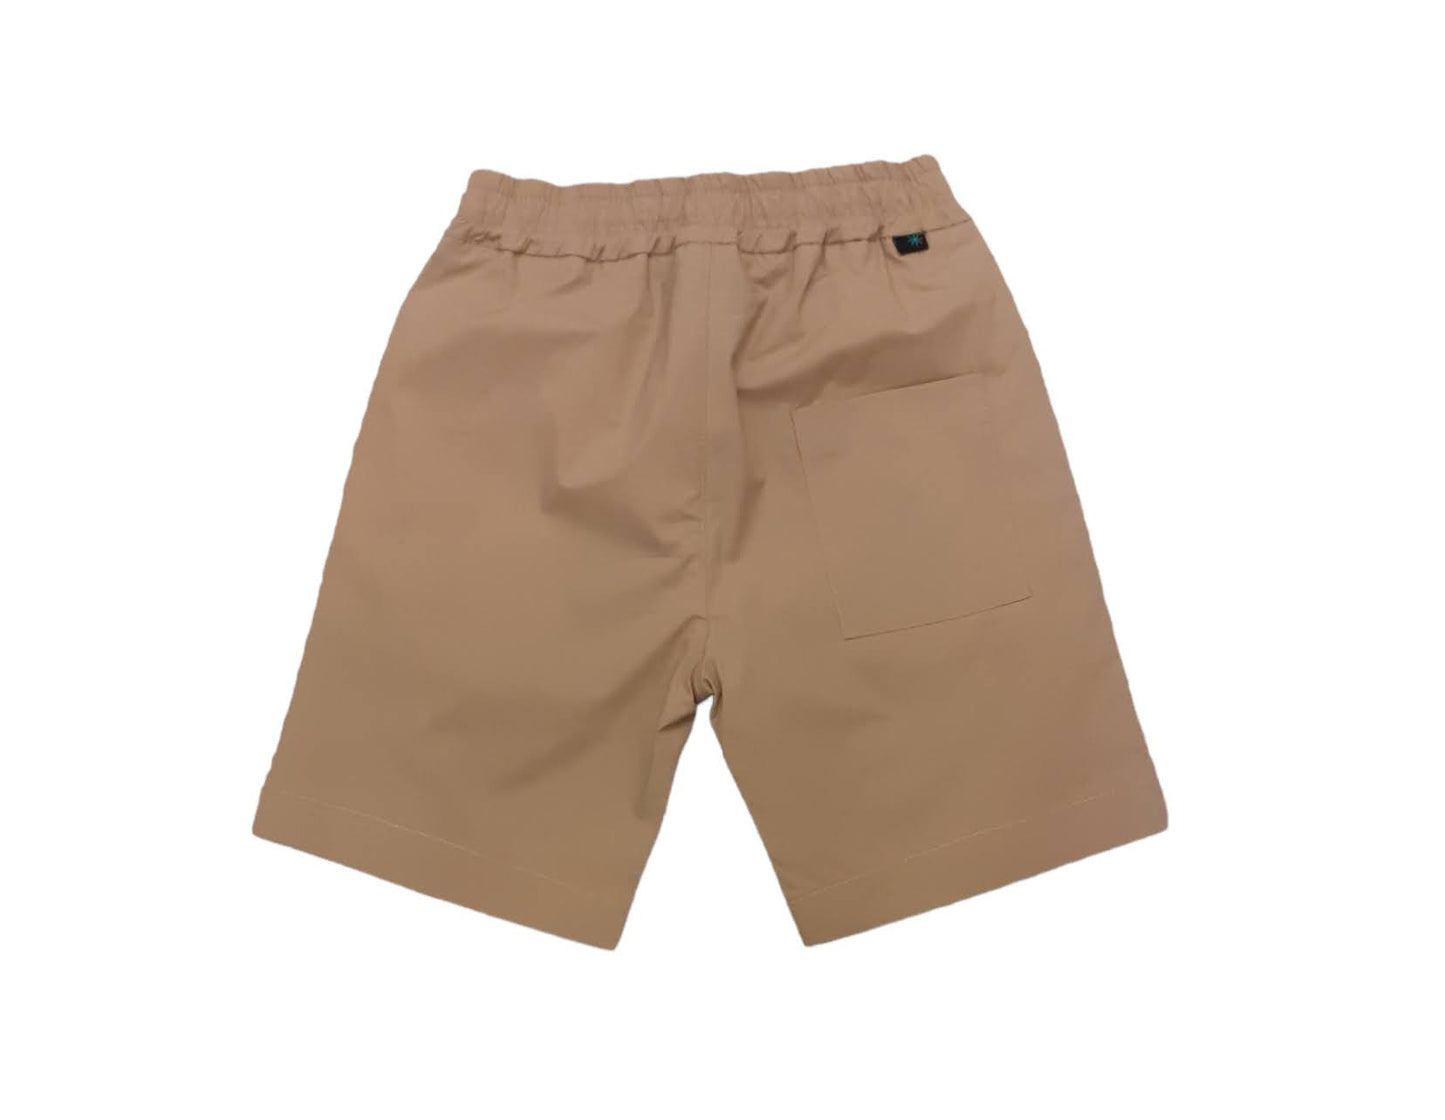 MANUEL RITZ Beige Cotton Bermuda Shorts